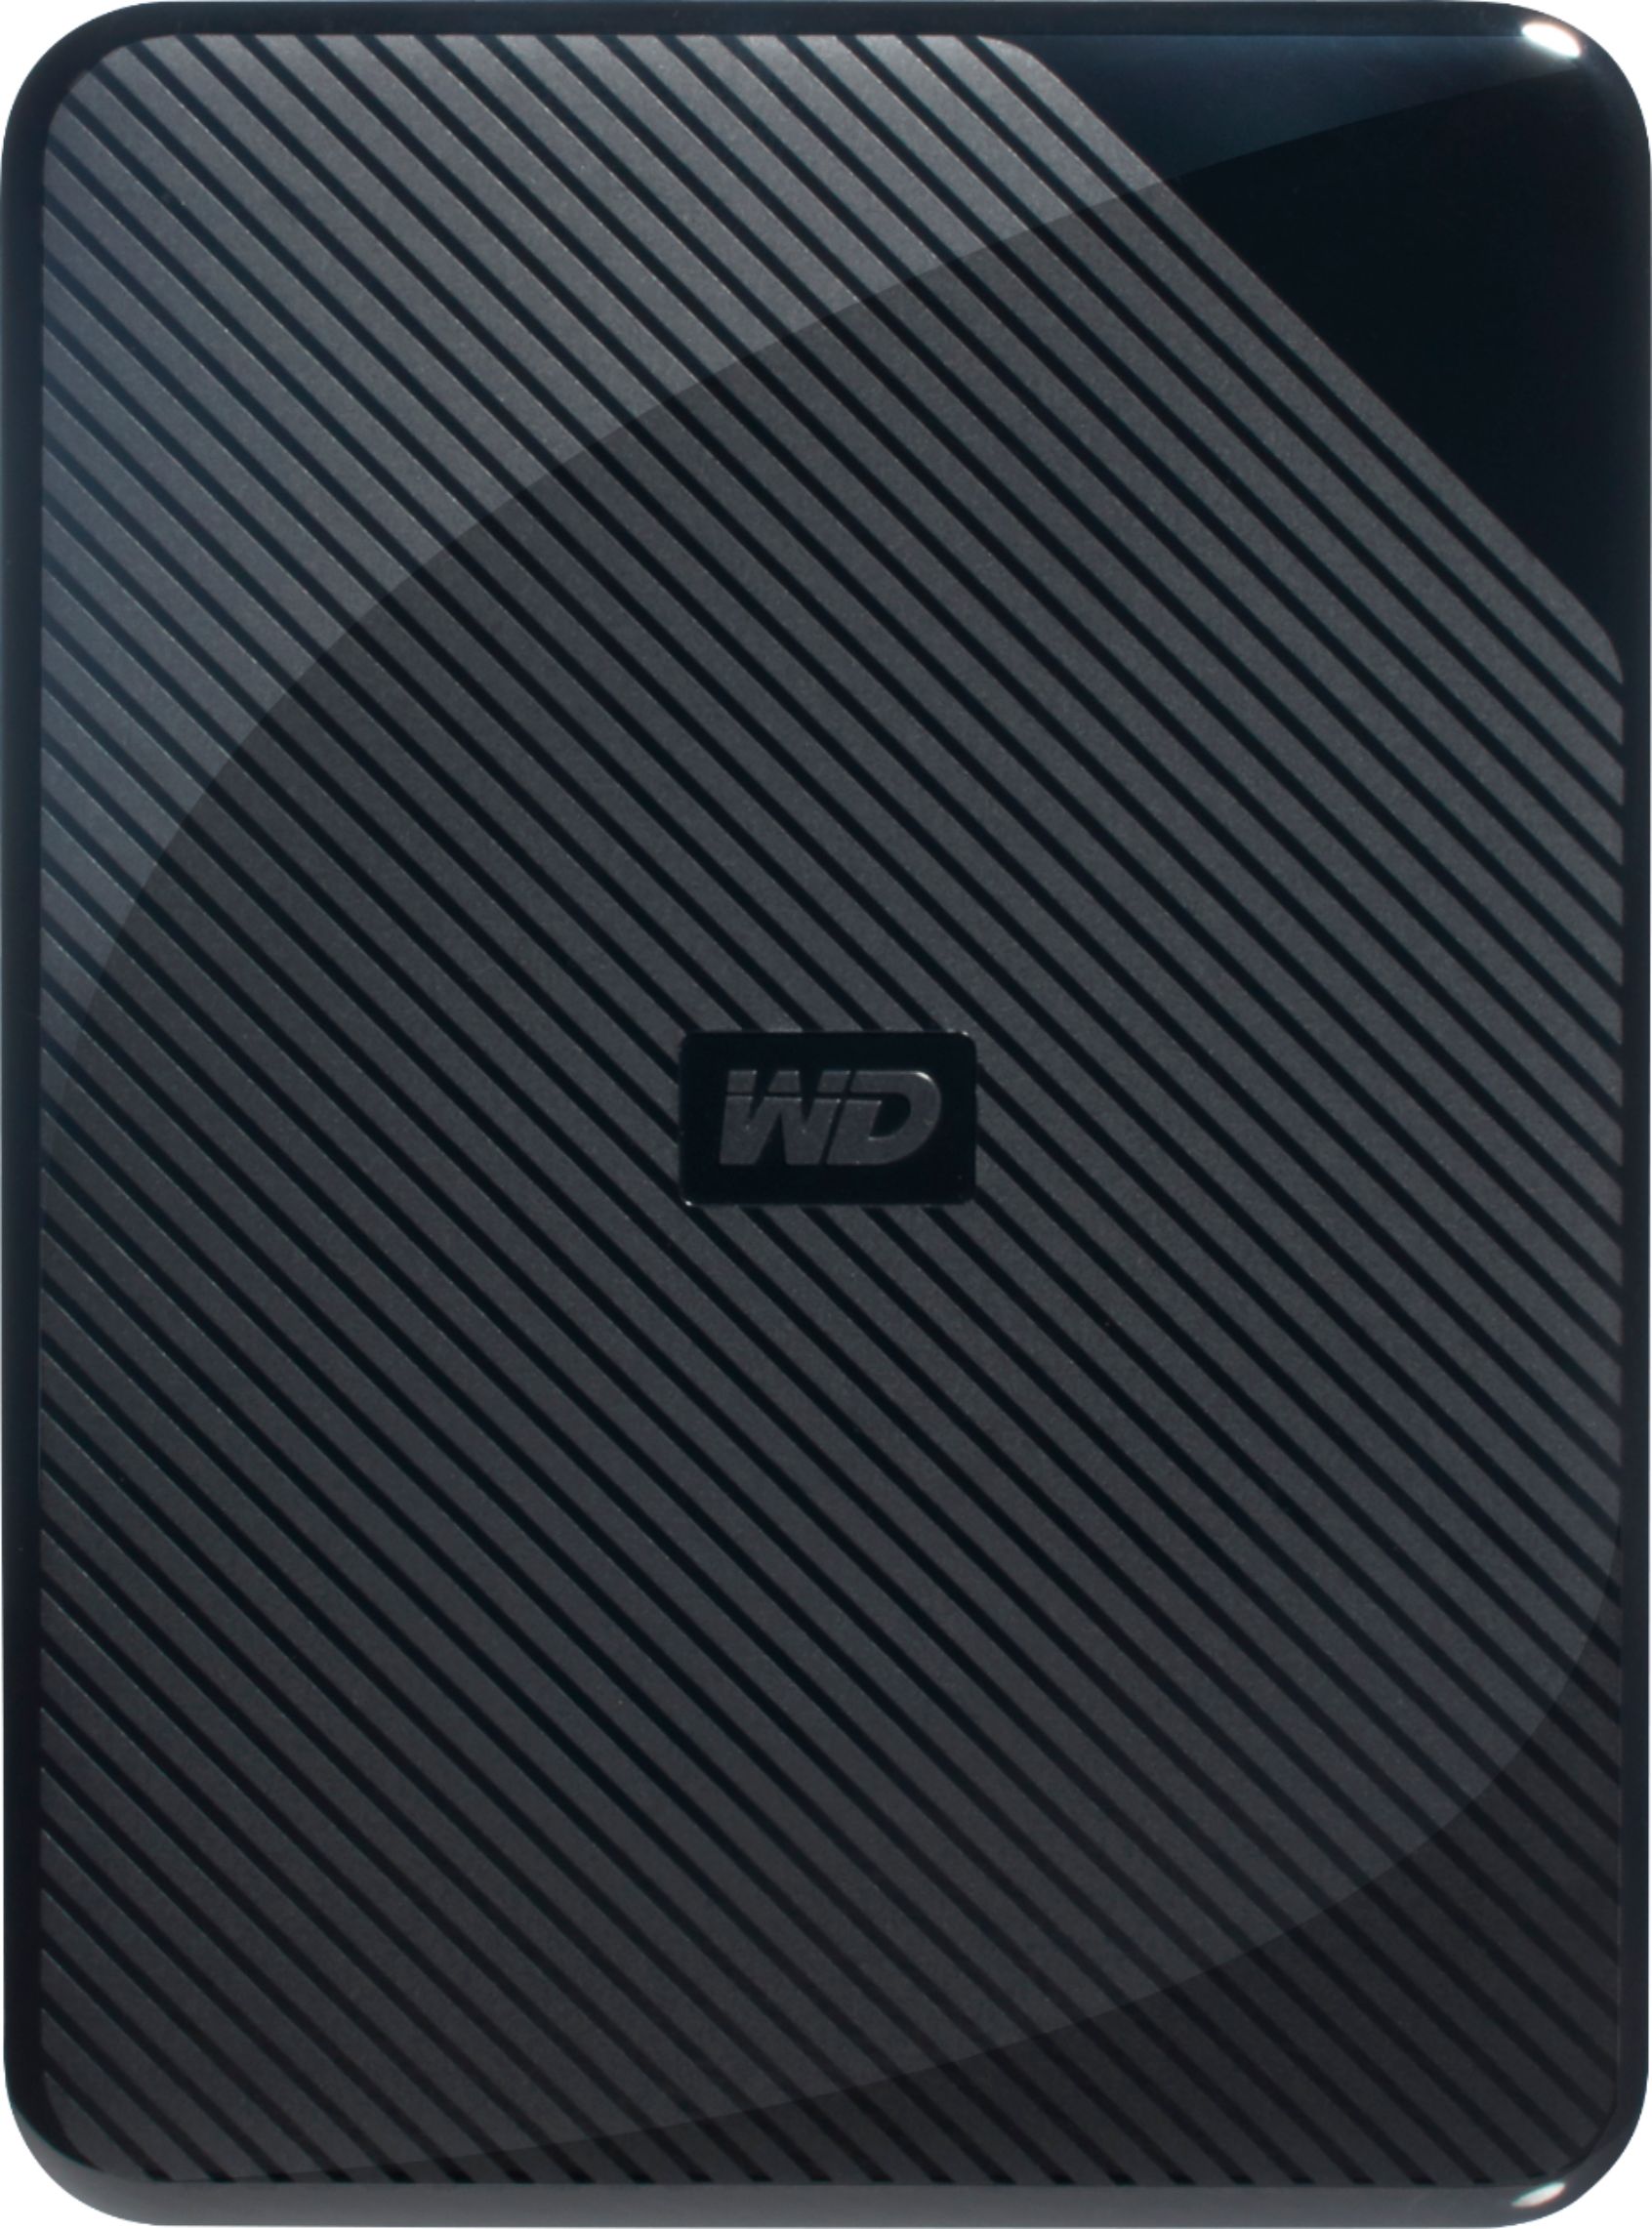 WD Game Drive for PS4 4TB External 3.0 Portable Hard Drive Black/Blue WDBM1M0040BBK-WESN Best Buy